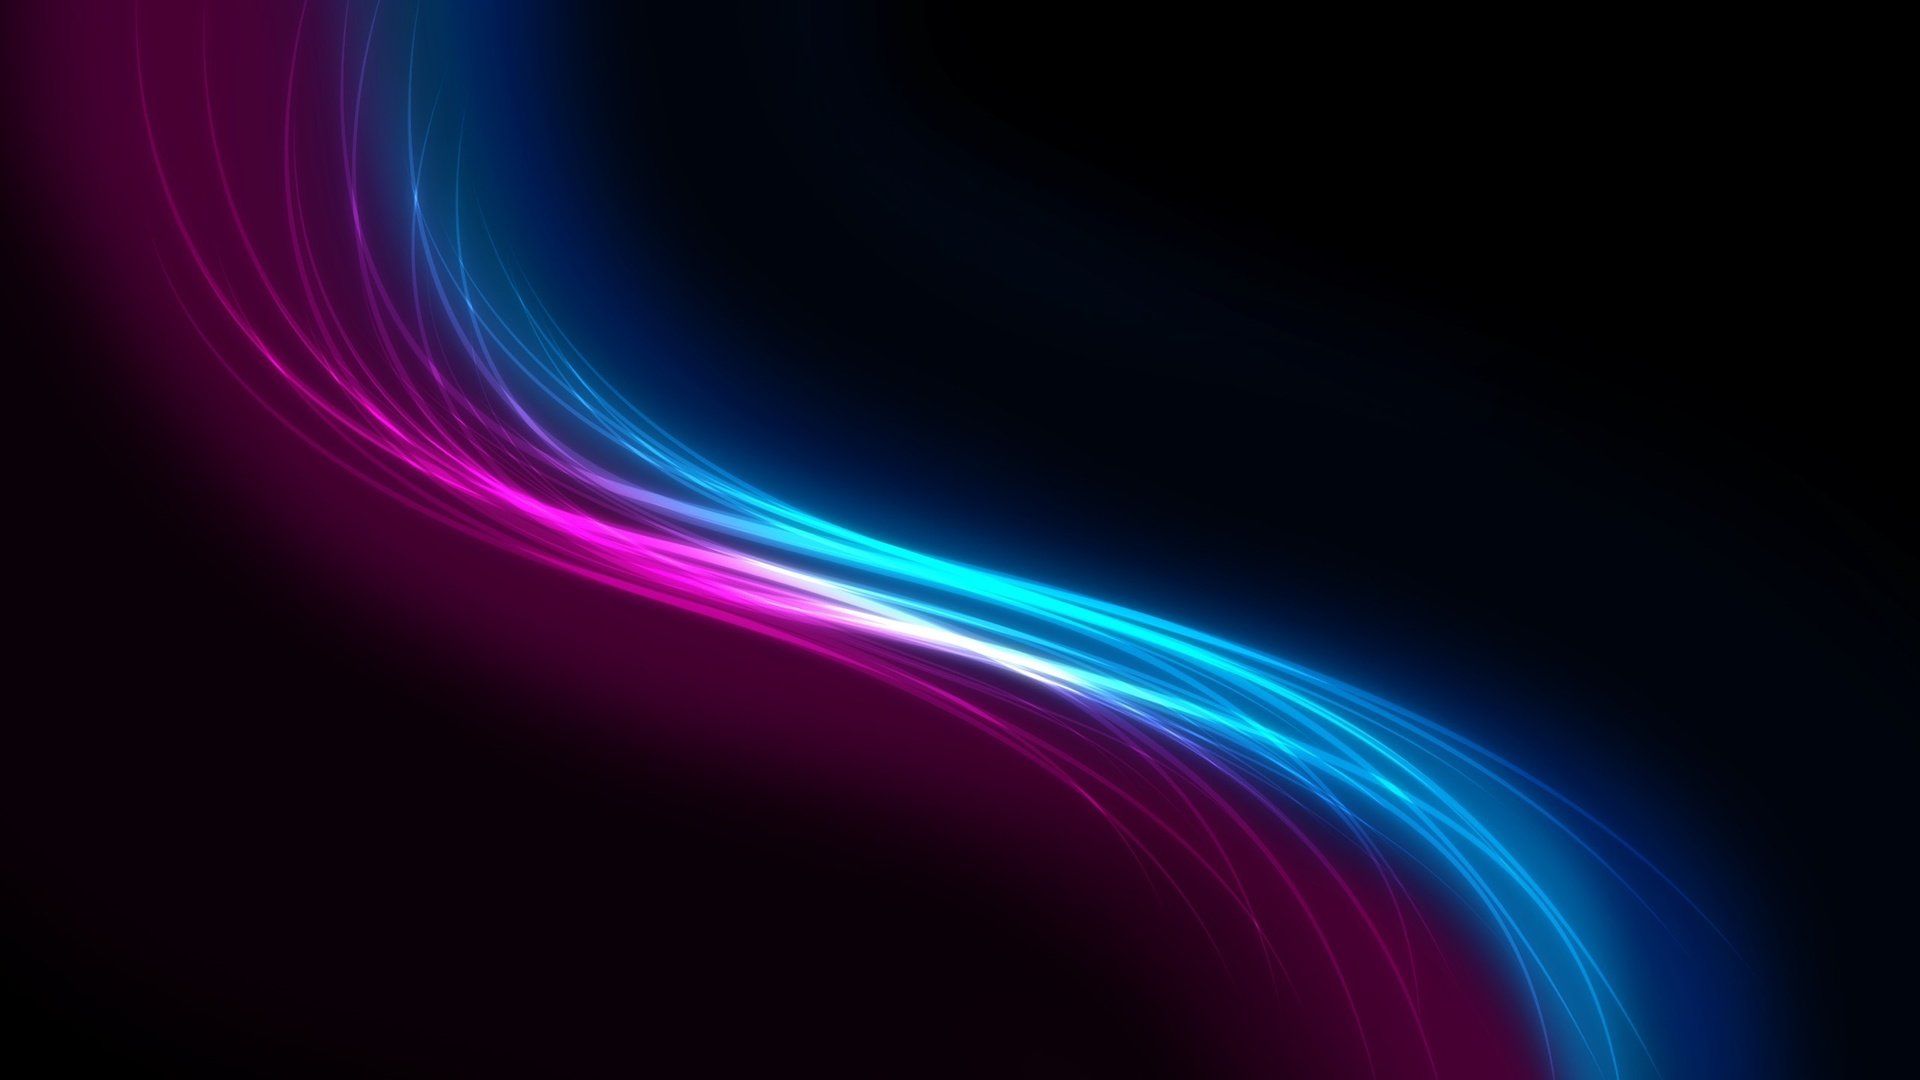  Linux Hintergrundbild 1920x1080. Abstract Neon Lights Artwork Wallpaper Apps.com